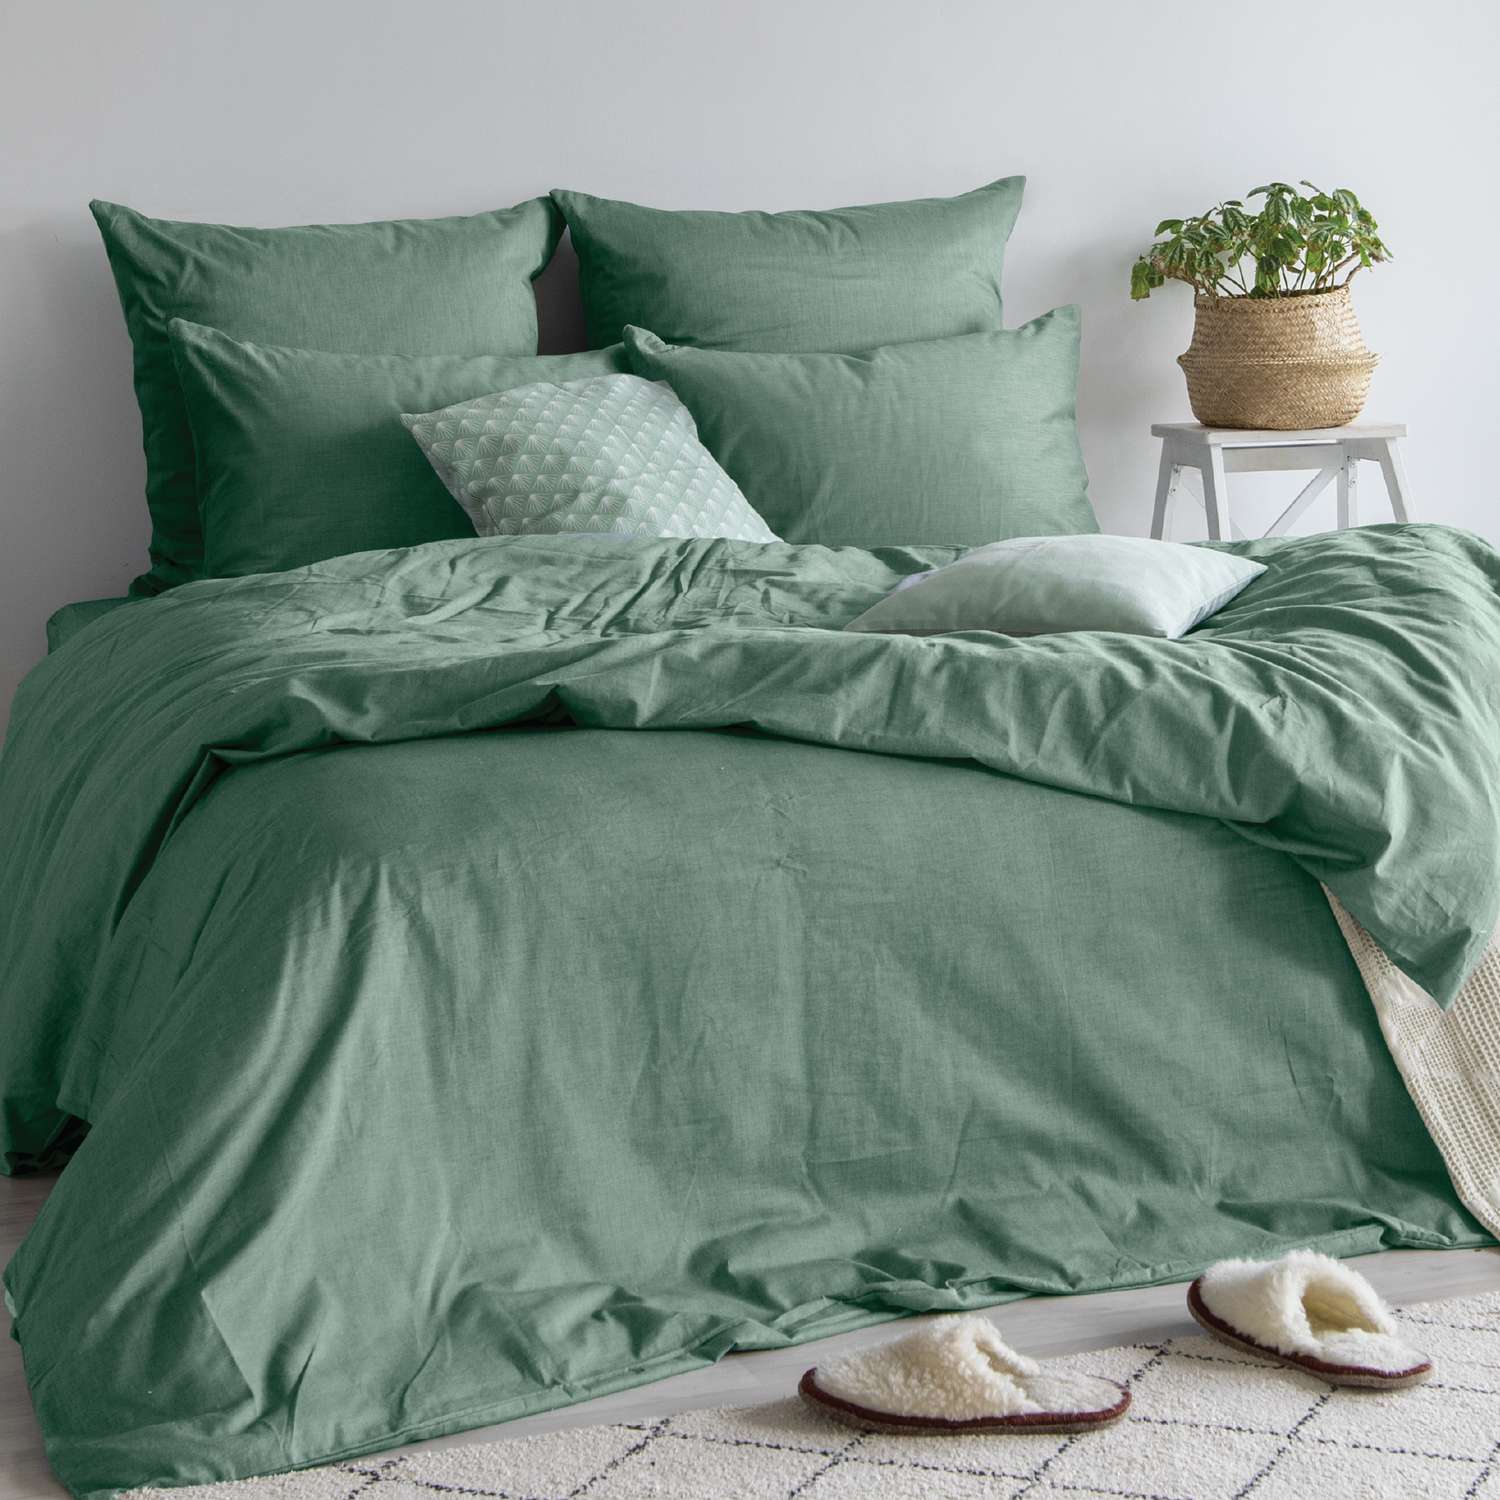 Комплект постельного белья Absolut 2СП Emerald наволочки 50х70см меланж - фото 2